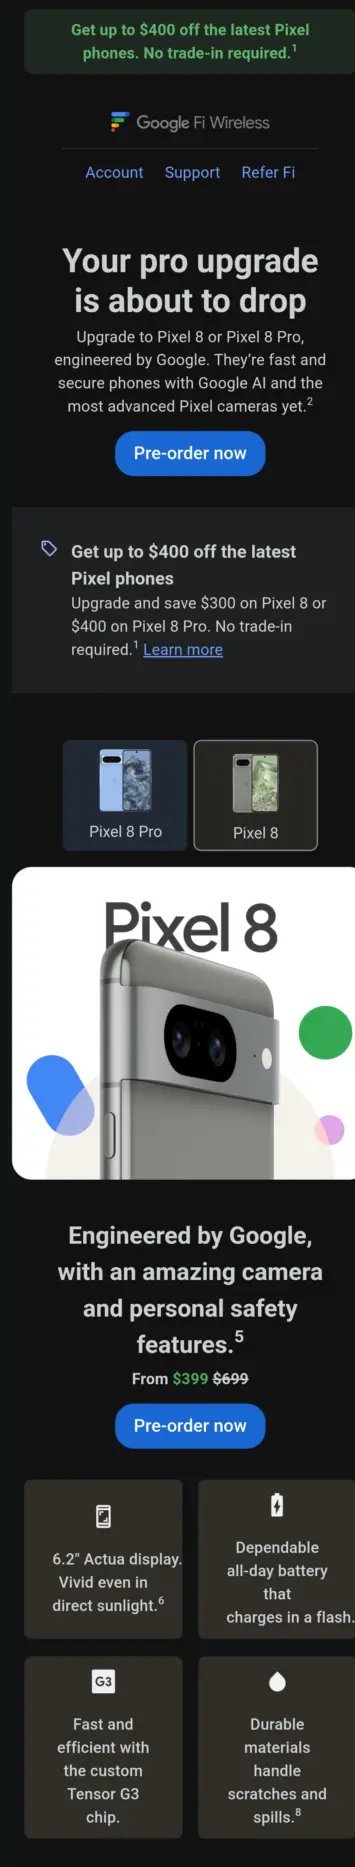 Google Fi Pixel 8 Upgrade Offer (2)